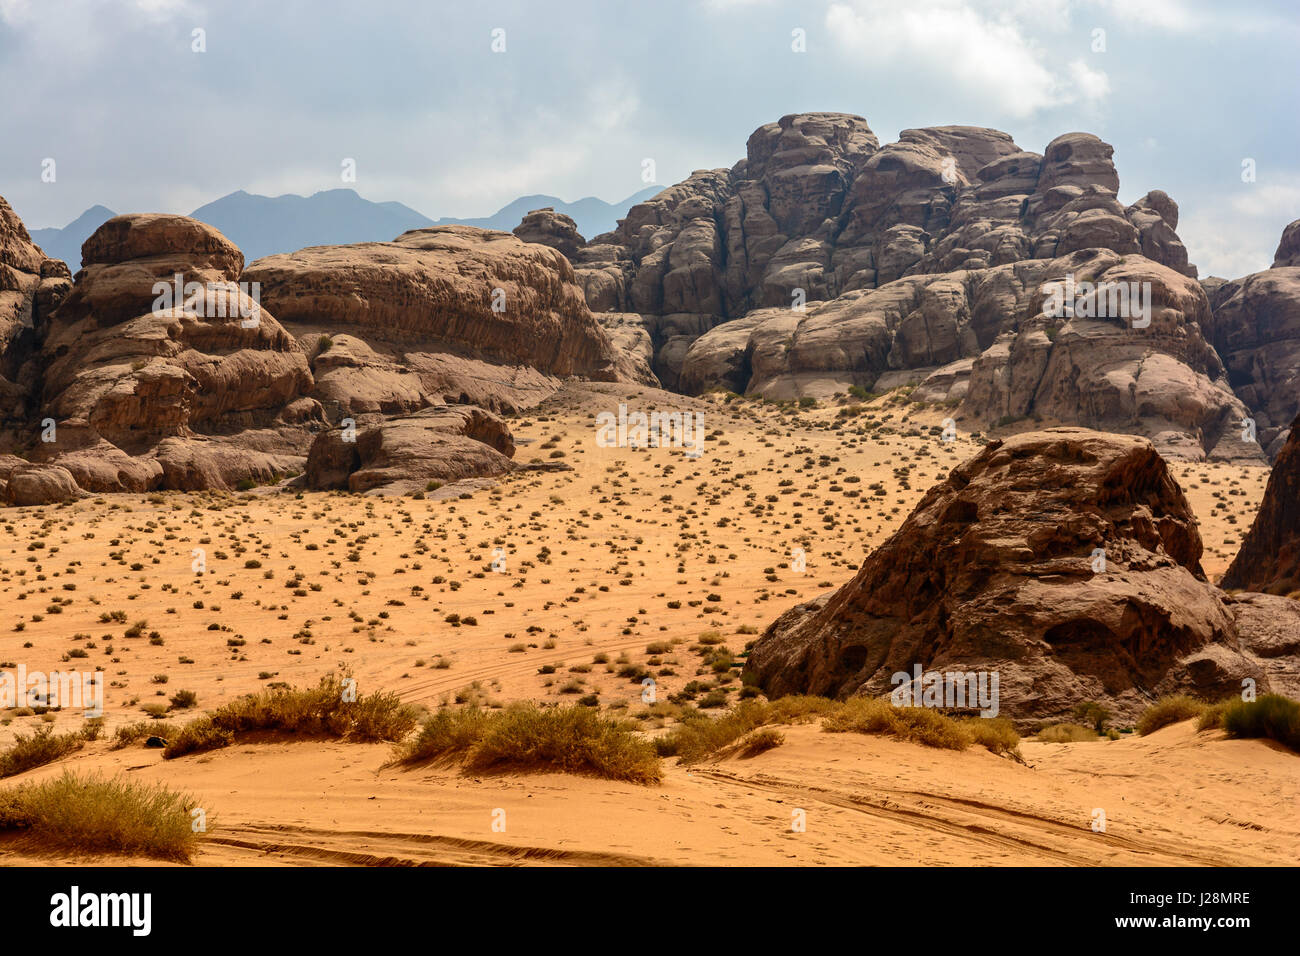 Jordan, Aqaba Gouvernement, Wadi Rum, Wüste Hochplateau in South Jordan. UNESCO-Weltnaturerbe. Drehort des Filmes "Lawrence von Arabien" Stockfoto